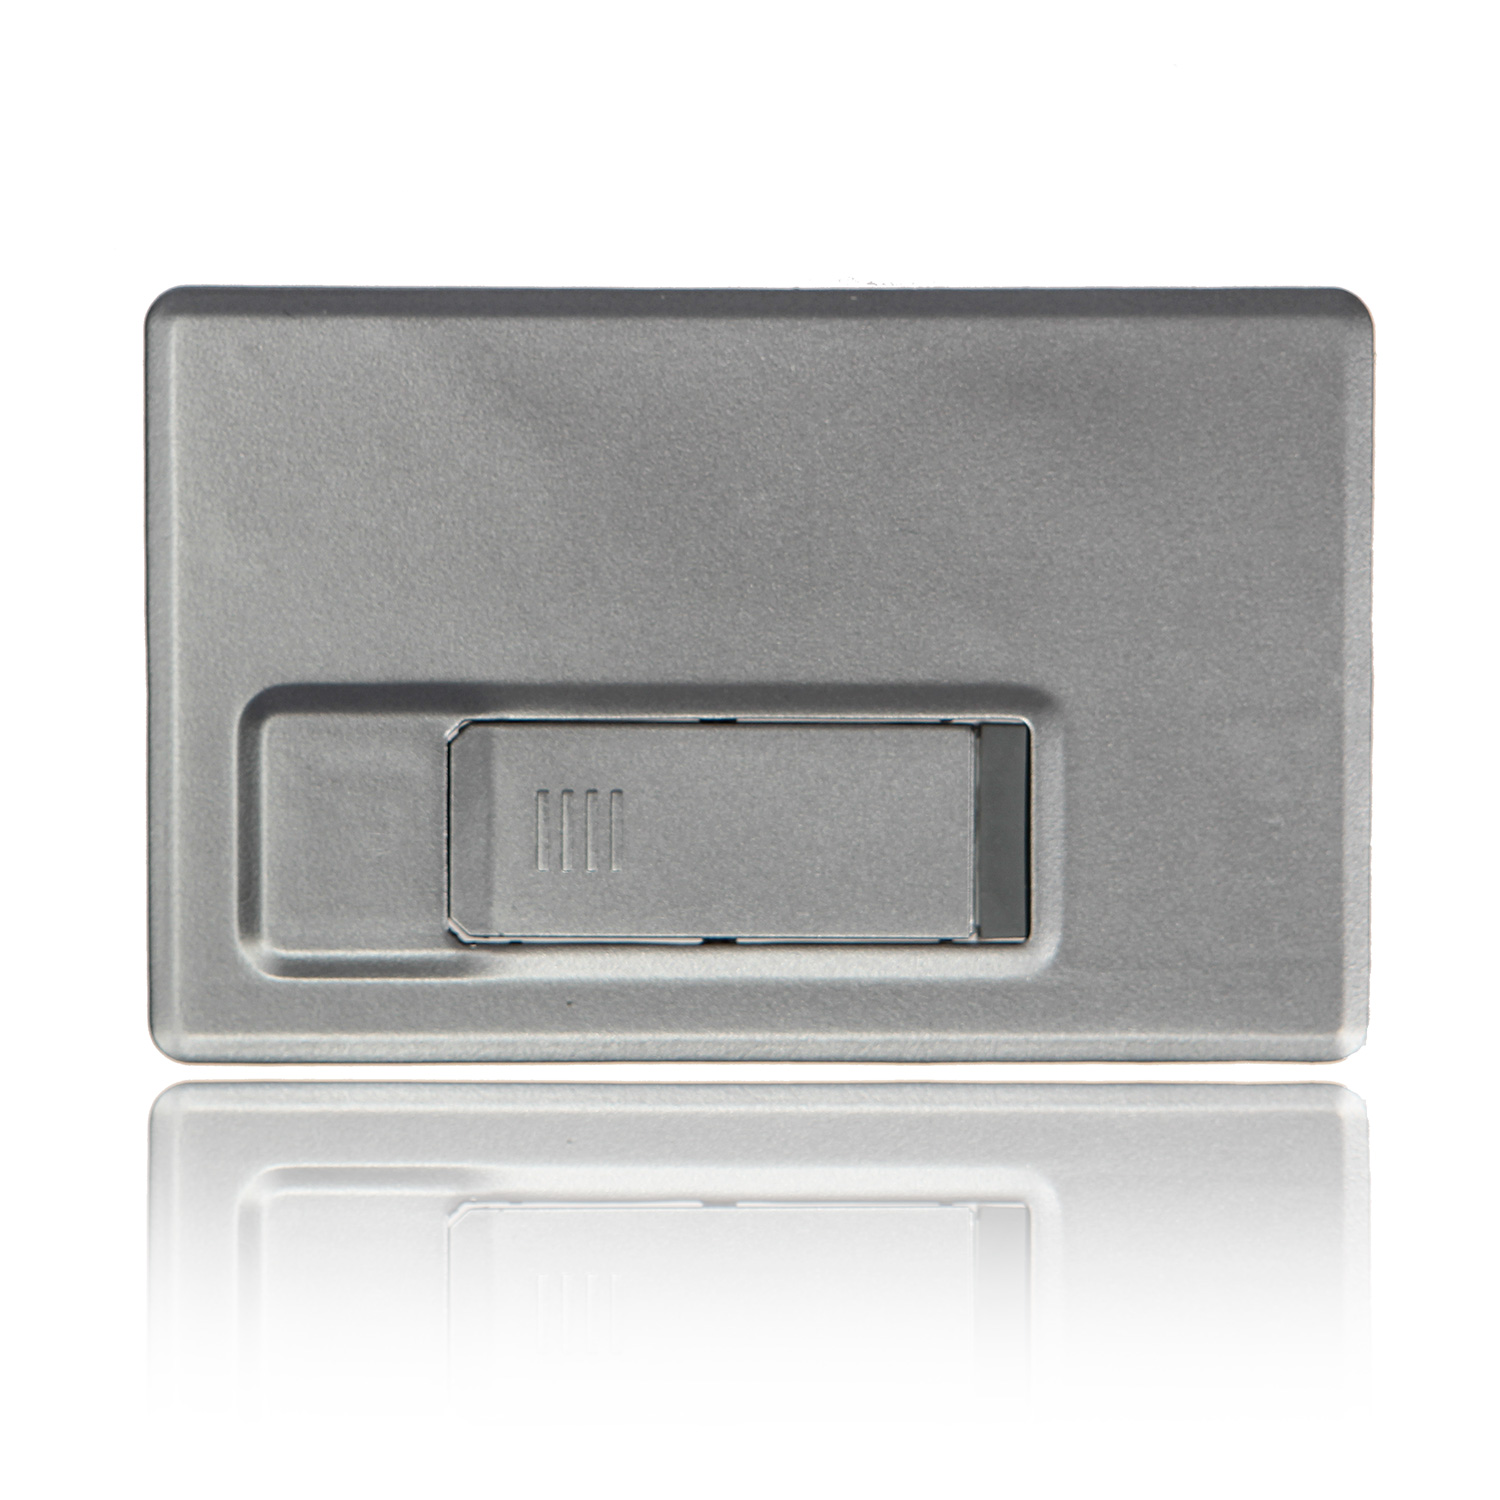 USB-Card / USB Flash Drive - 8GB - Silver